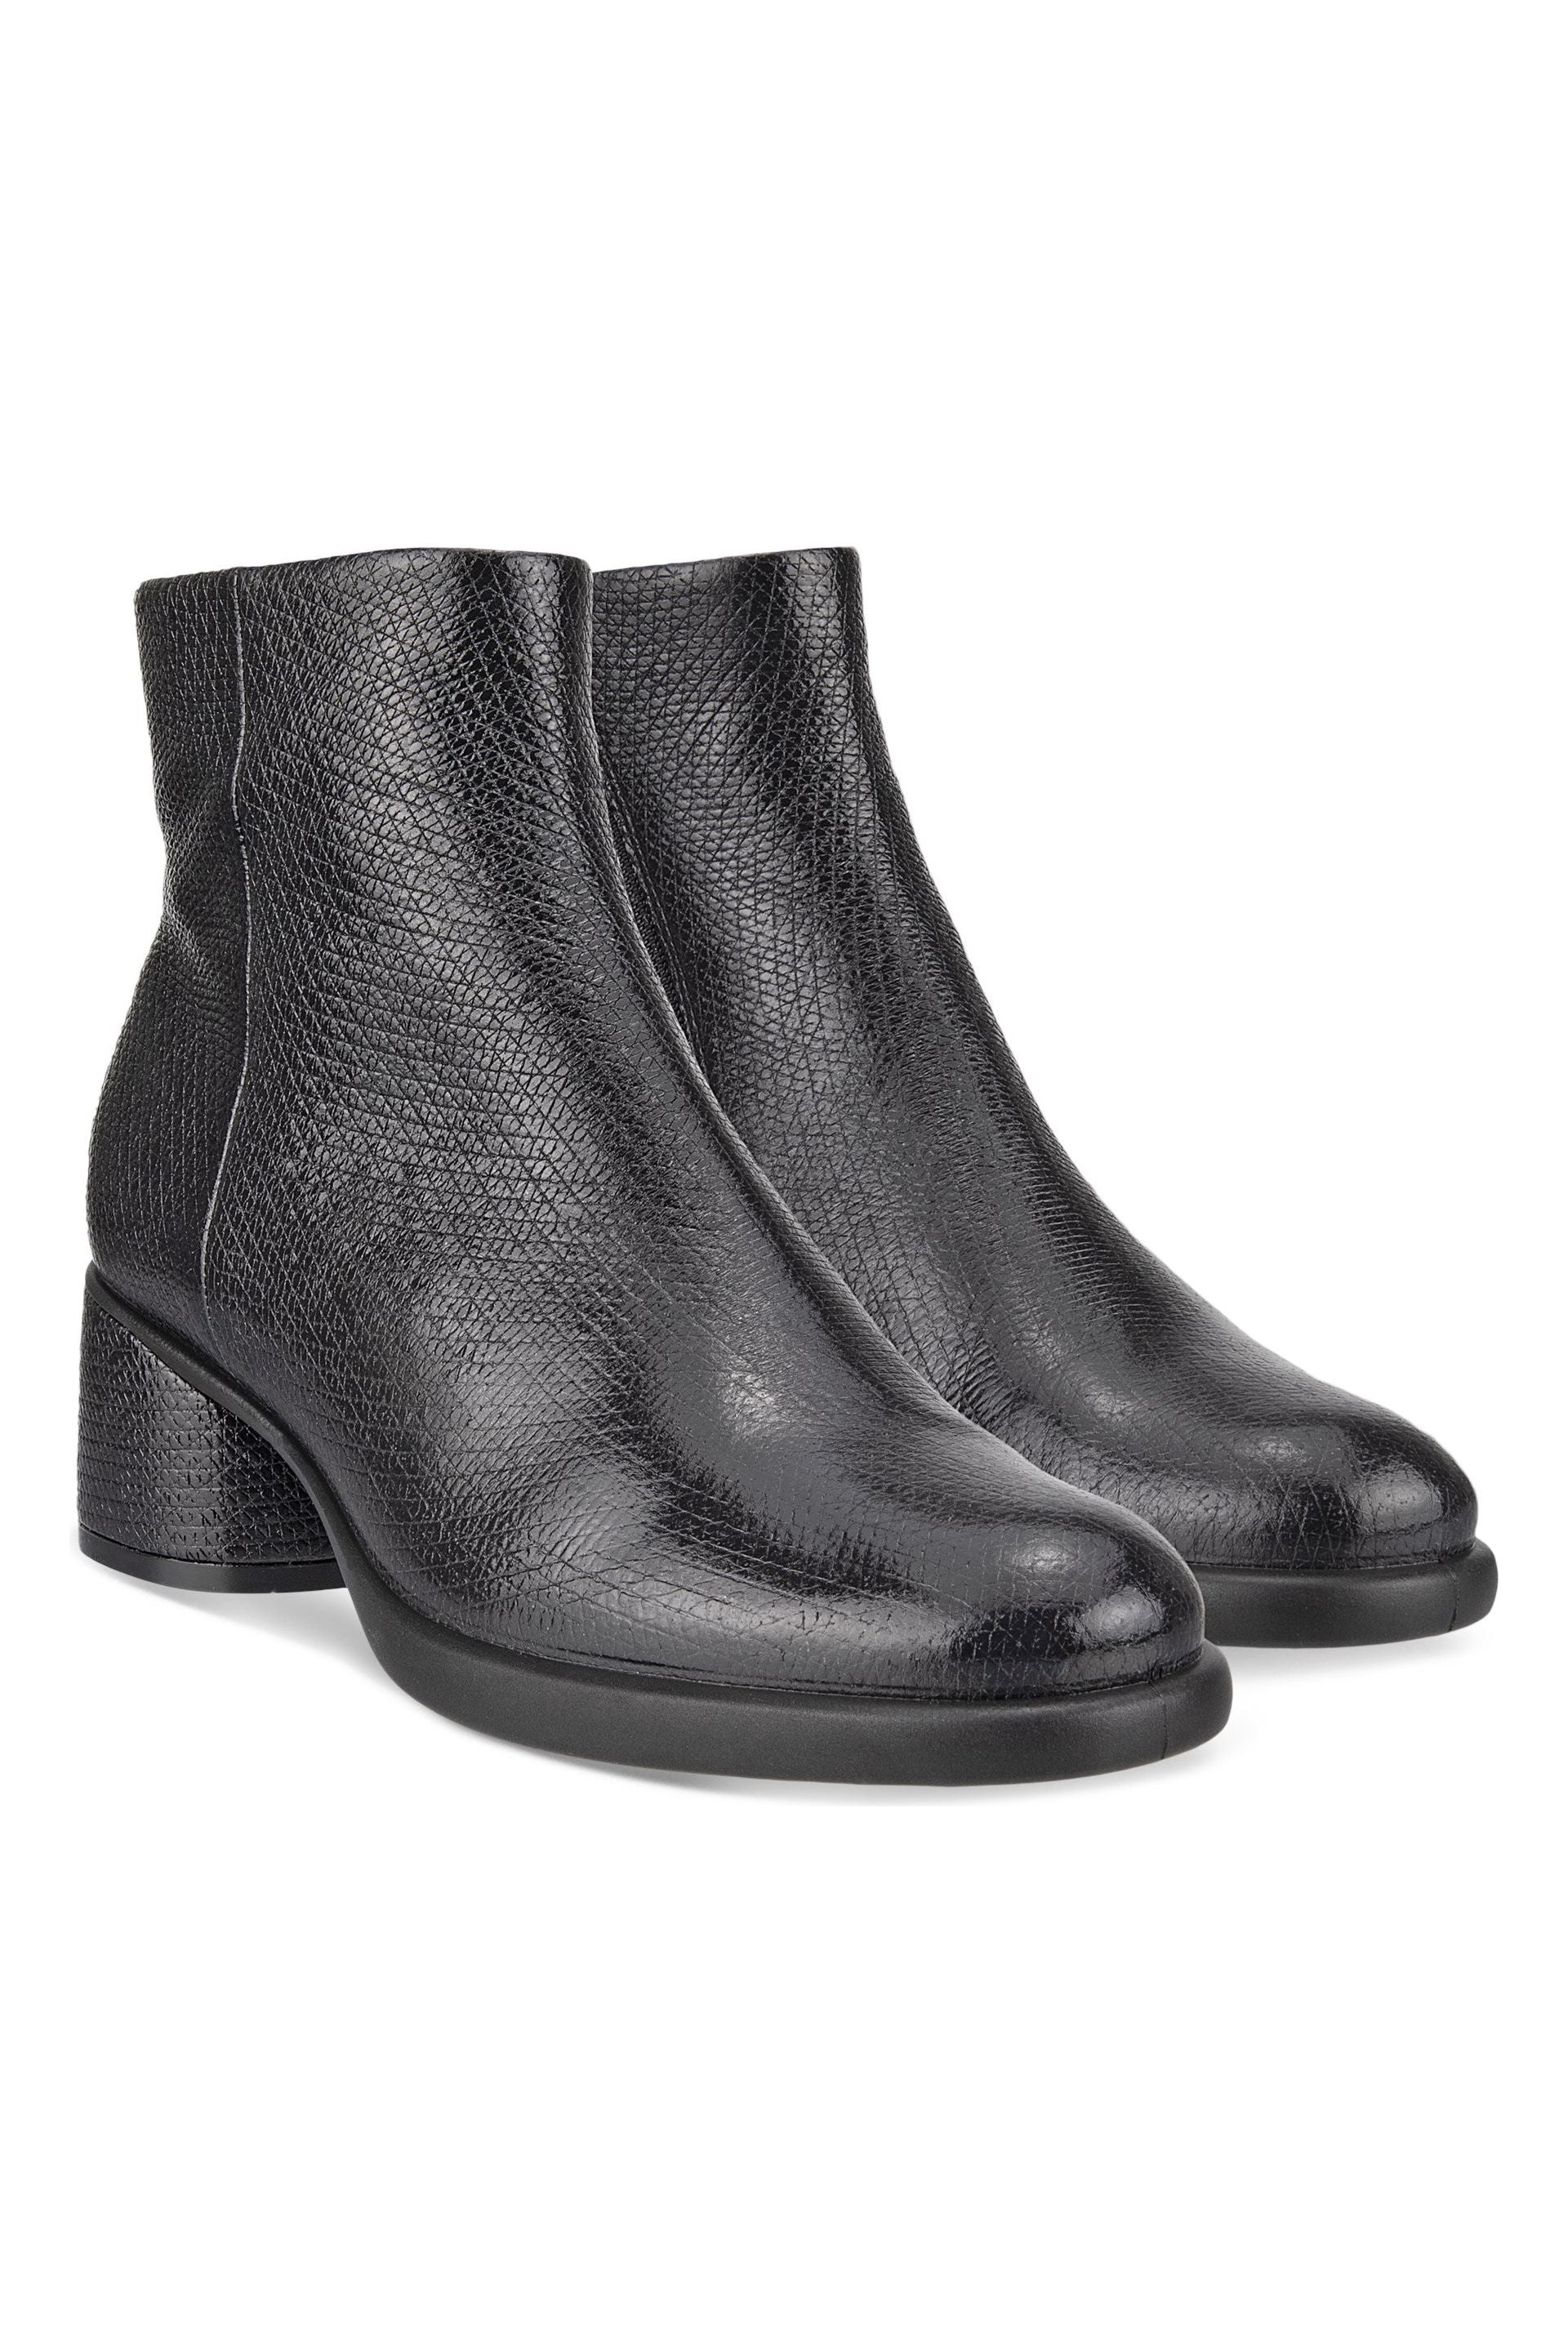 Ecco 222413-11001 Black Croc leather boot